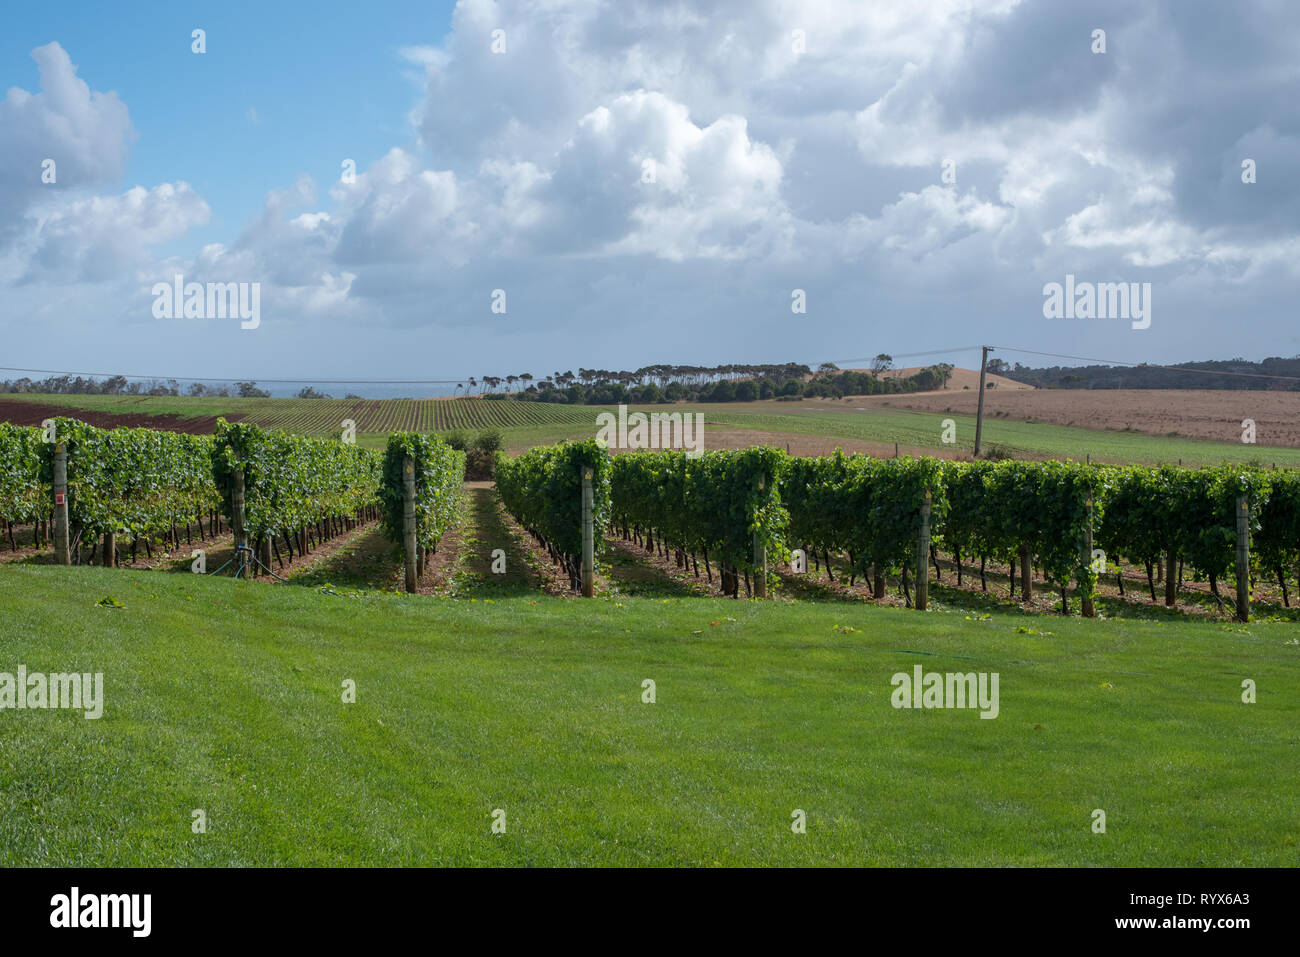 Row after row of grape plants in an Australian vineyard. Stock Photo